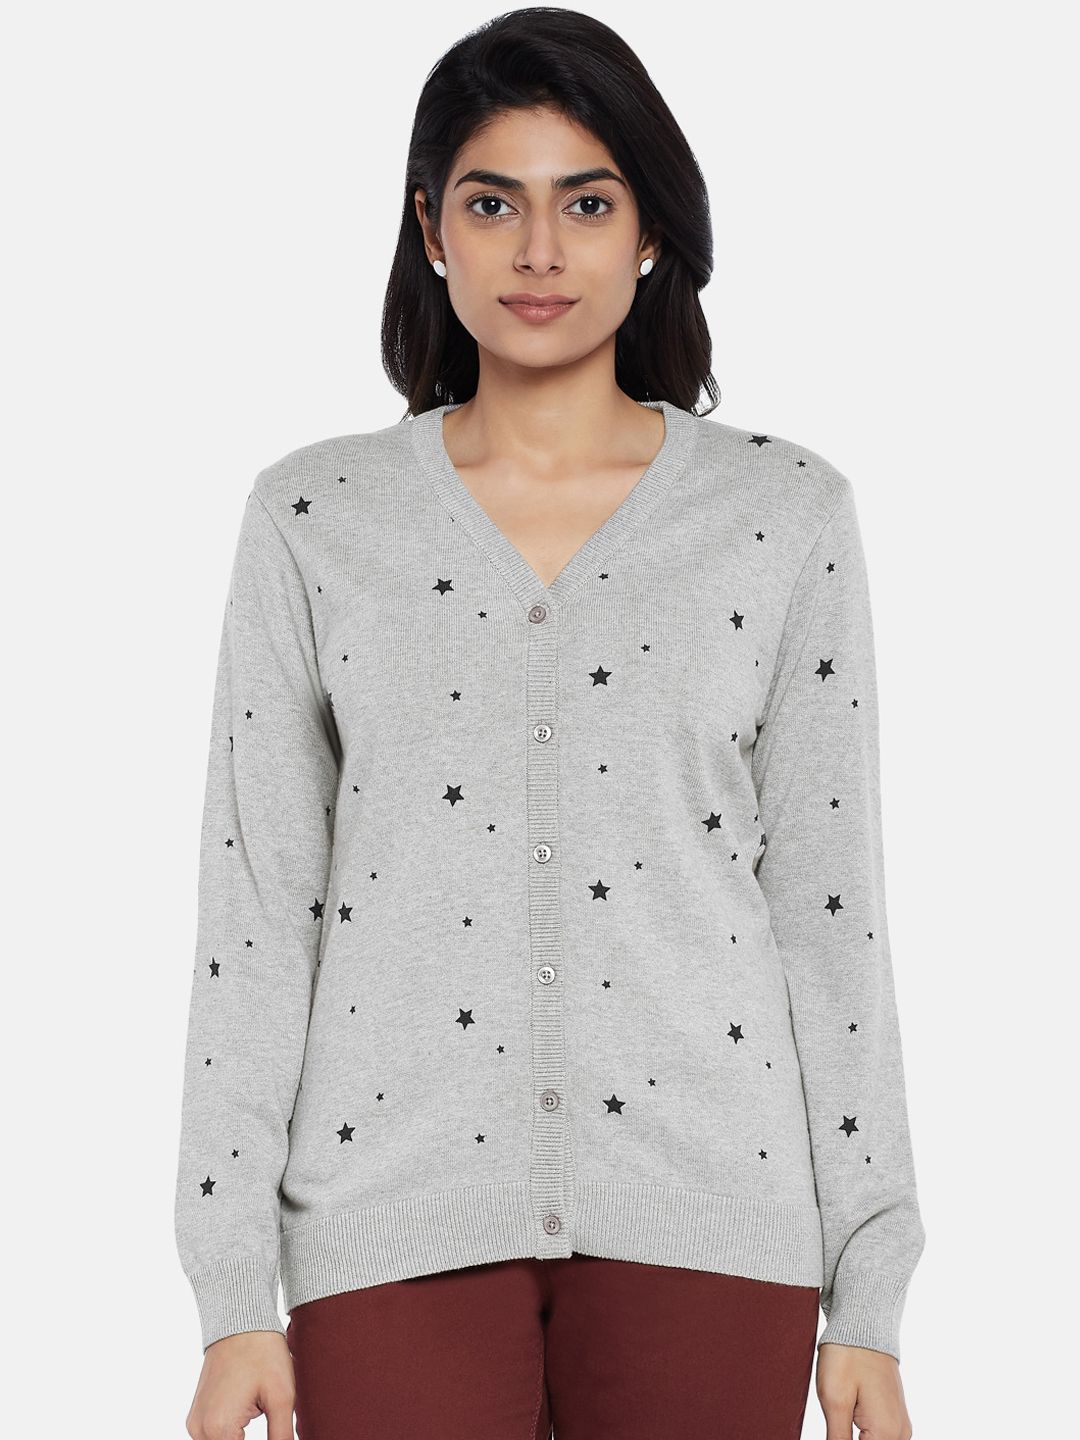 Honey by Pantaloons Women Grey Printed Cardigan Sweater Price in India